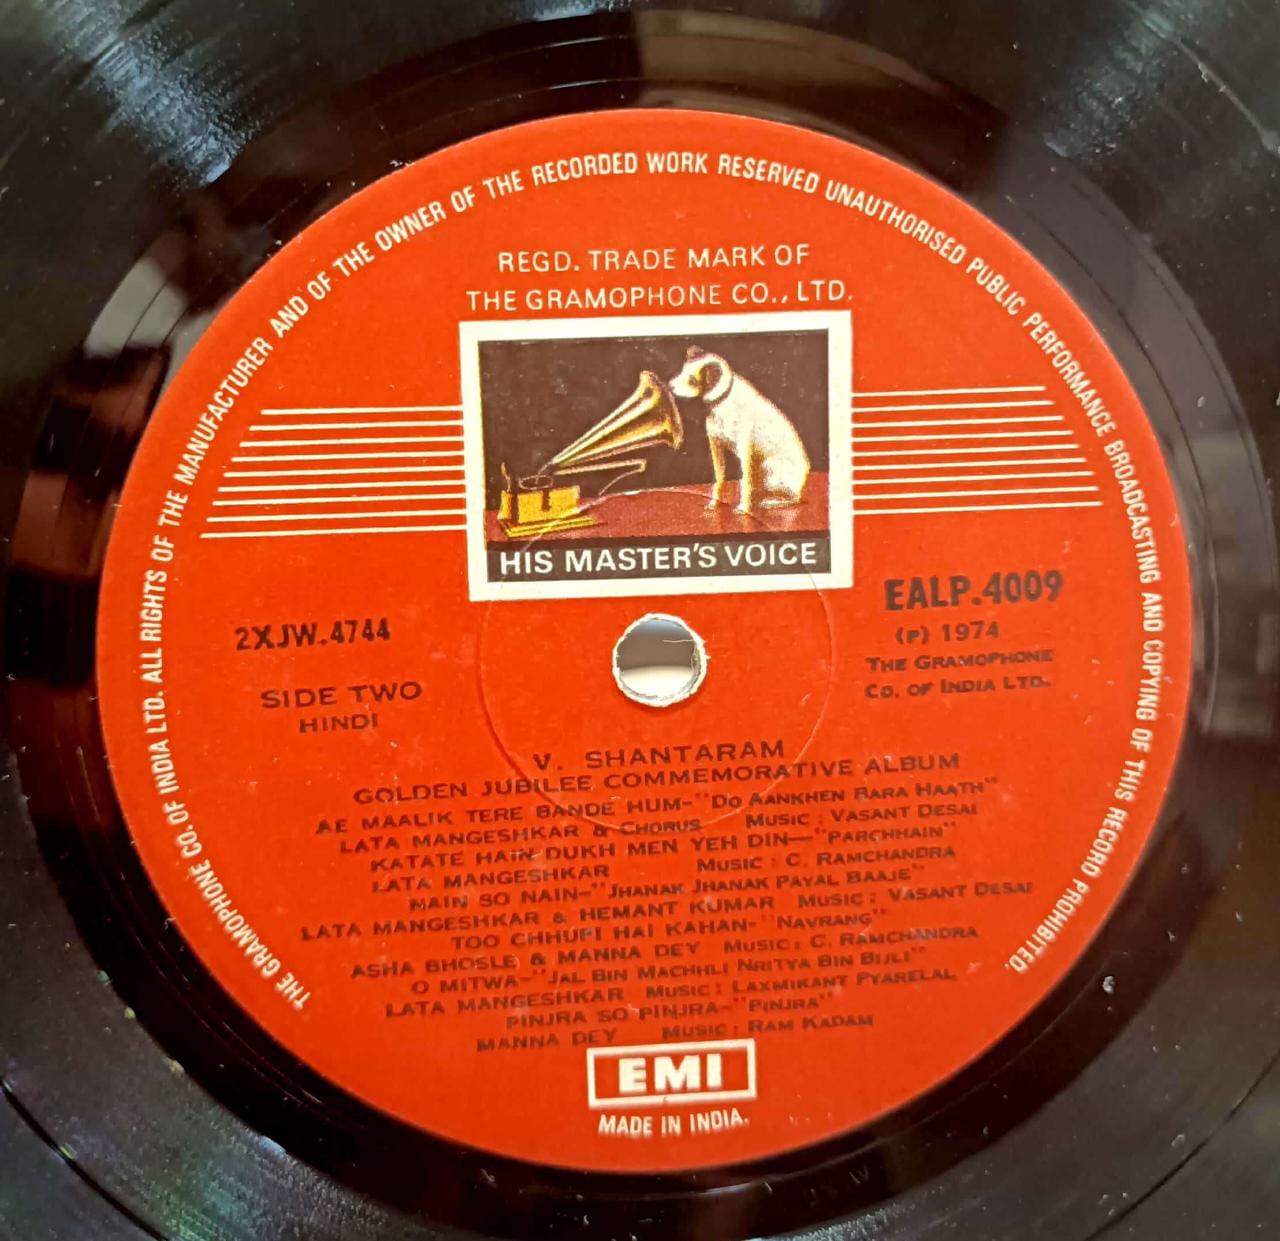 V. Shantaram – Golden Jubilee Commemorative Album - Lp Record 